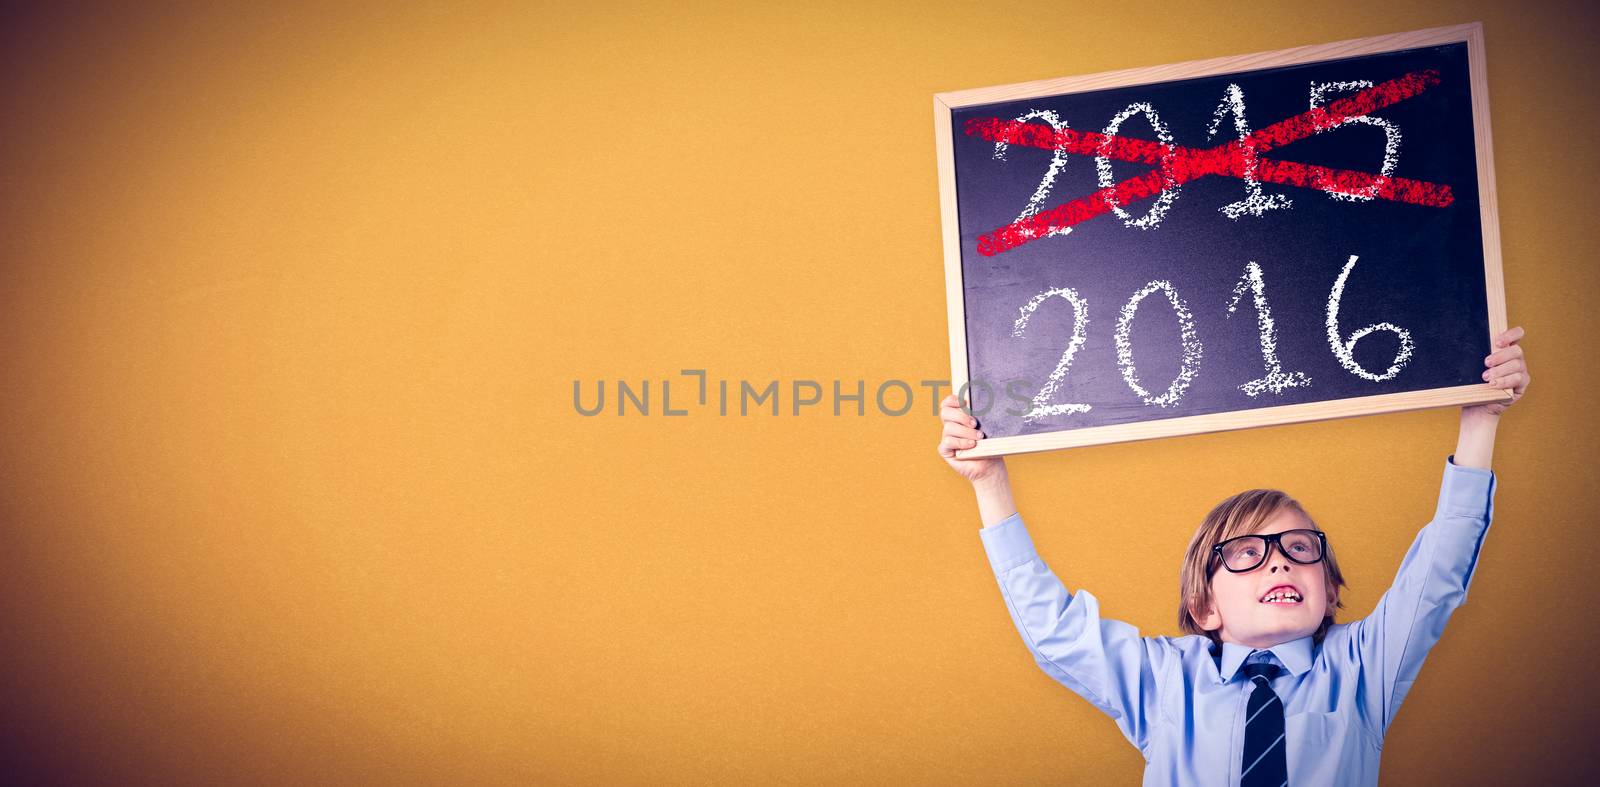 Cute pupil holding chalkboard against orange background